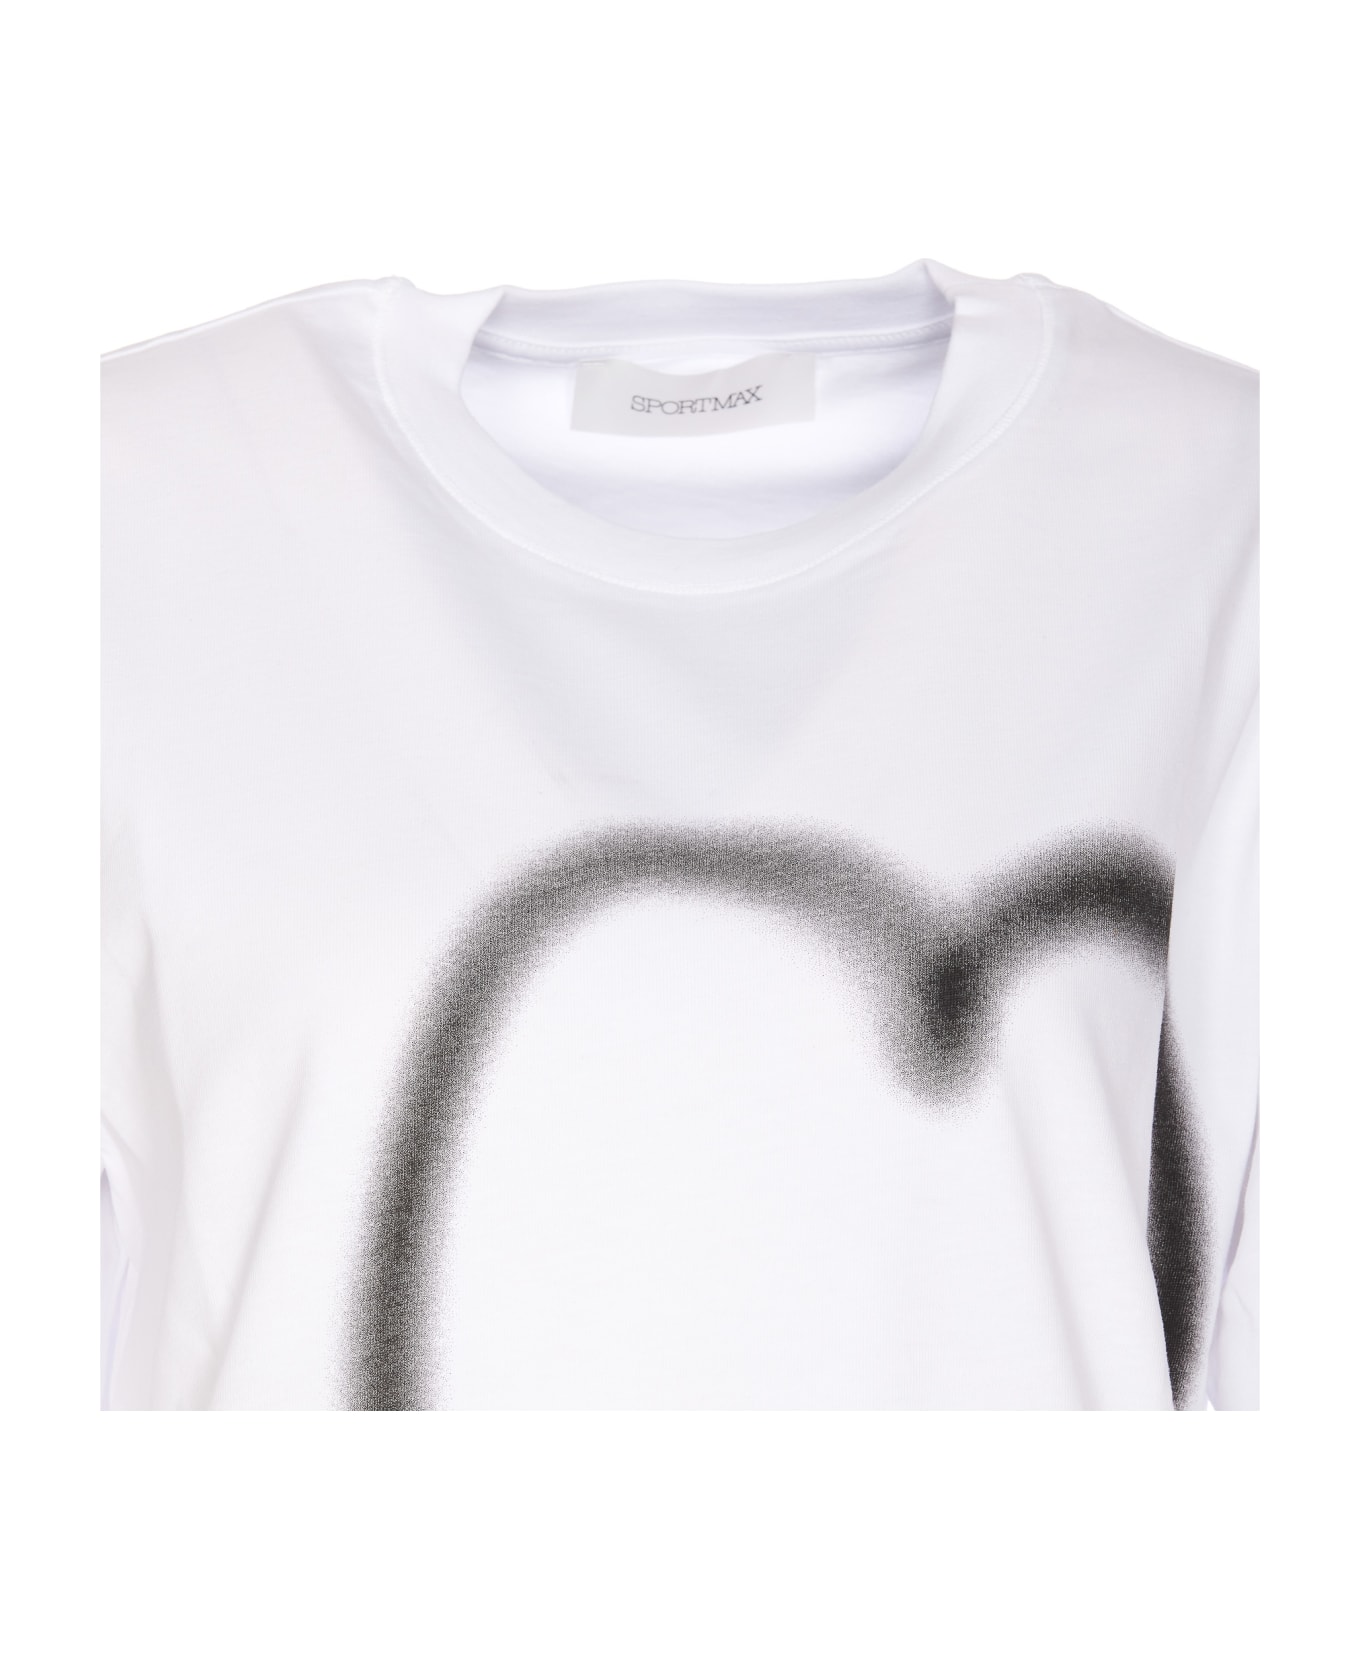 SportMax Jersey T-shirt Heart Print - White Tシャツ